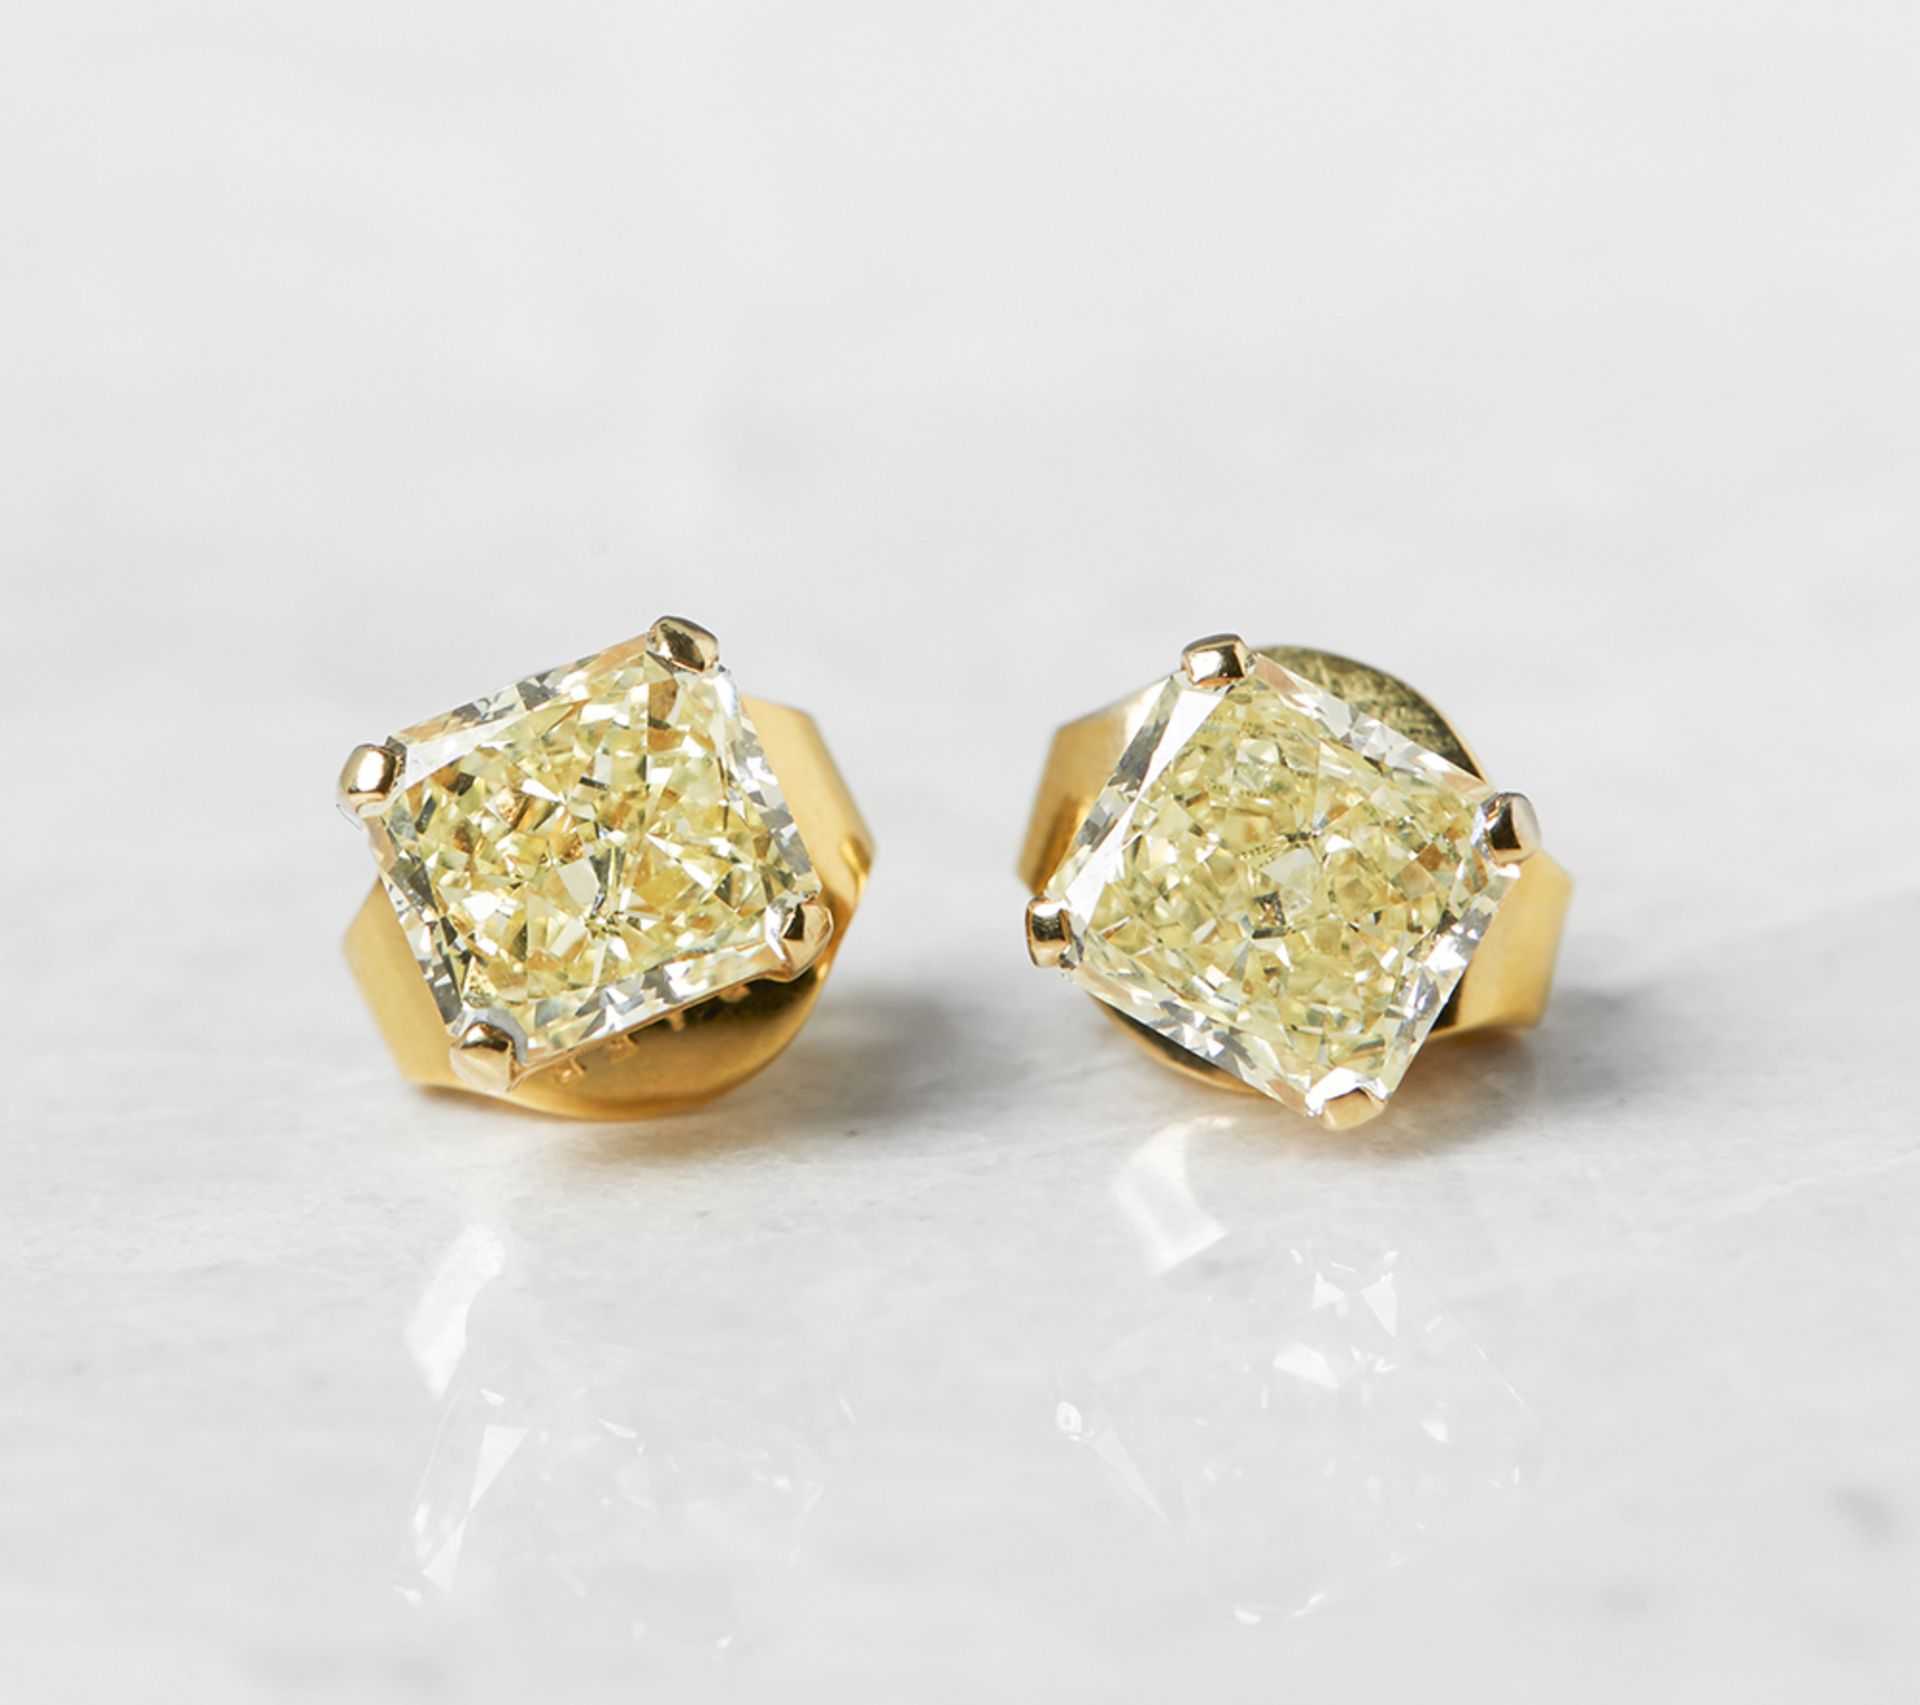 Graff Diamonds 18k Yellow Gold 2.66ct Yellow Diamond Stud Earrings with GIA Certification - Image 11 of 15